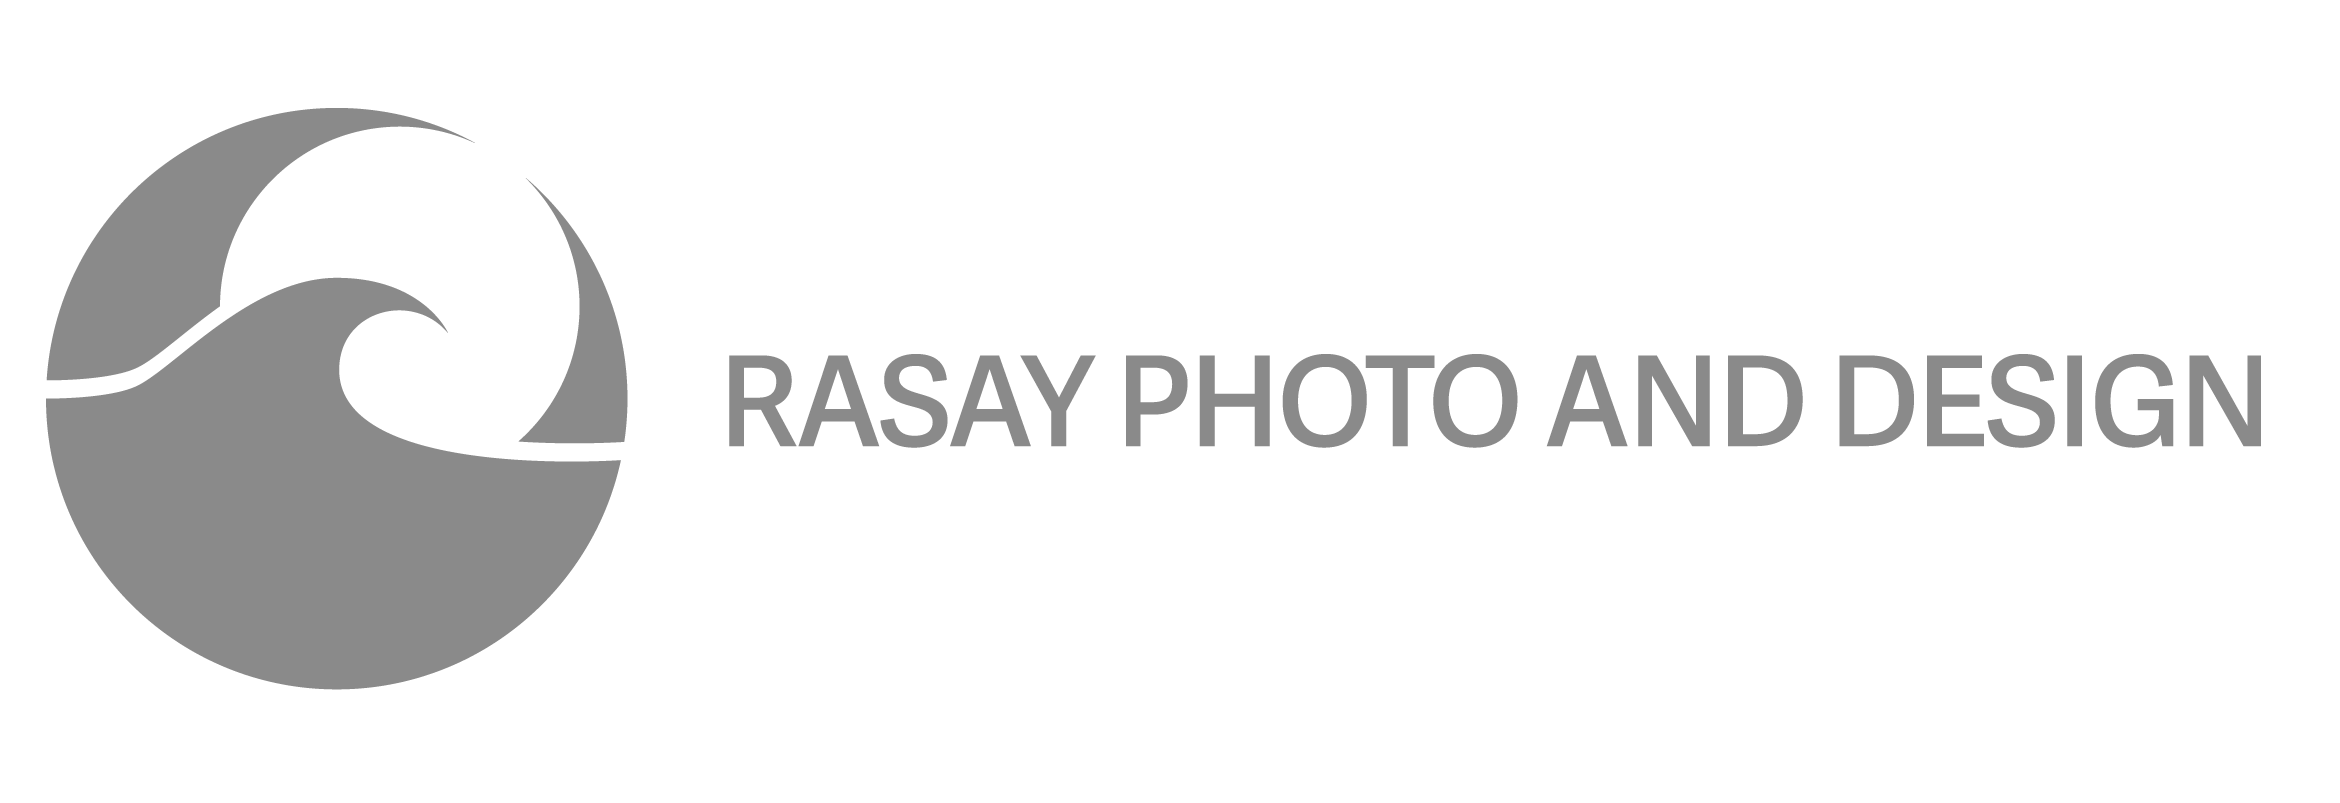 Rasay Photo and Design